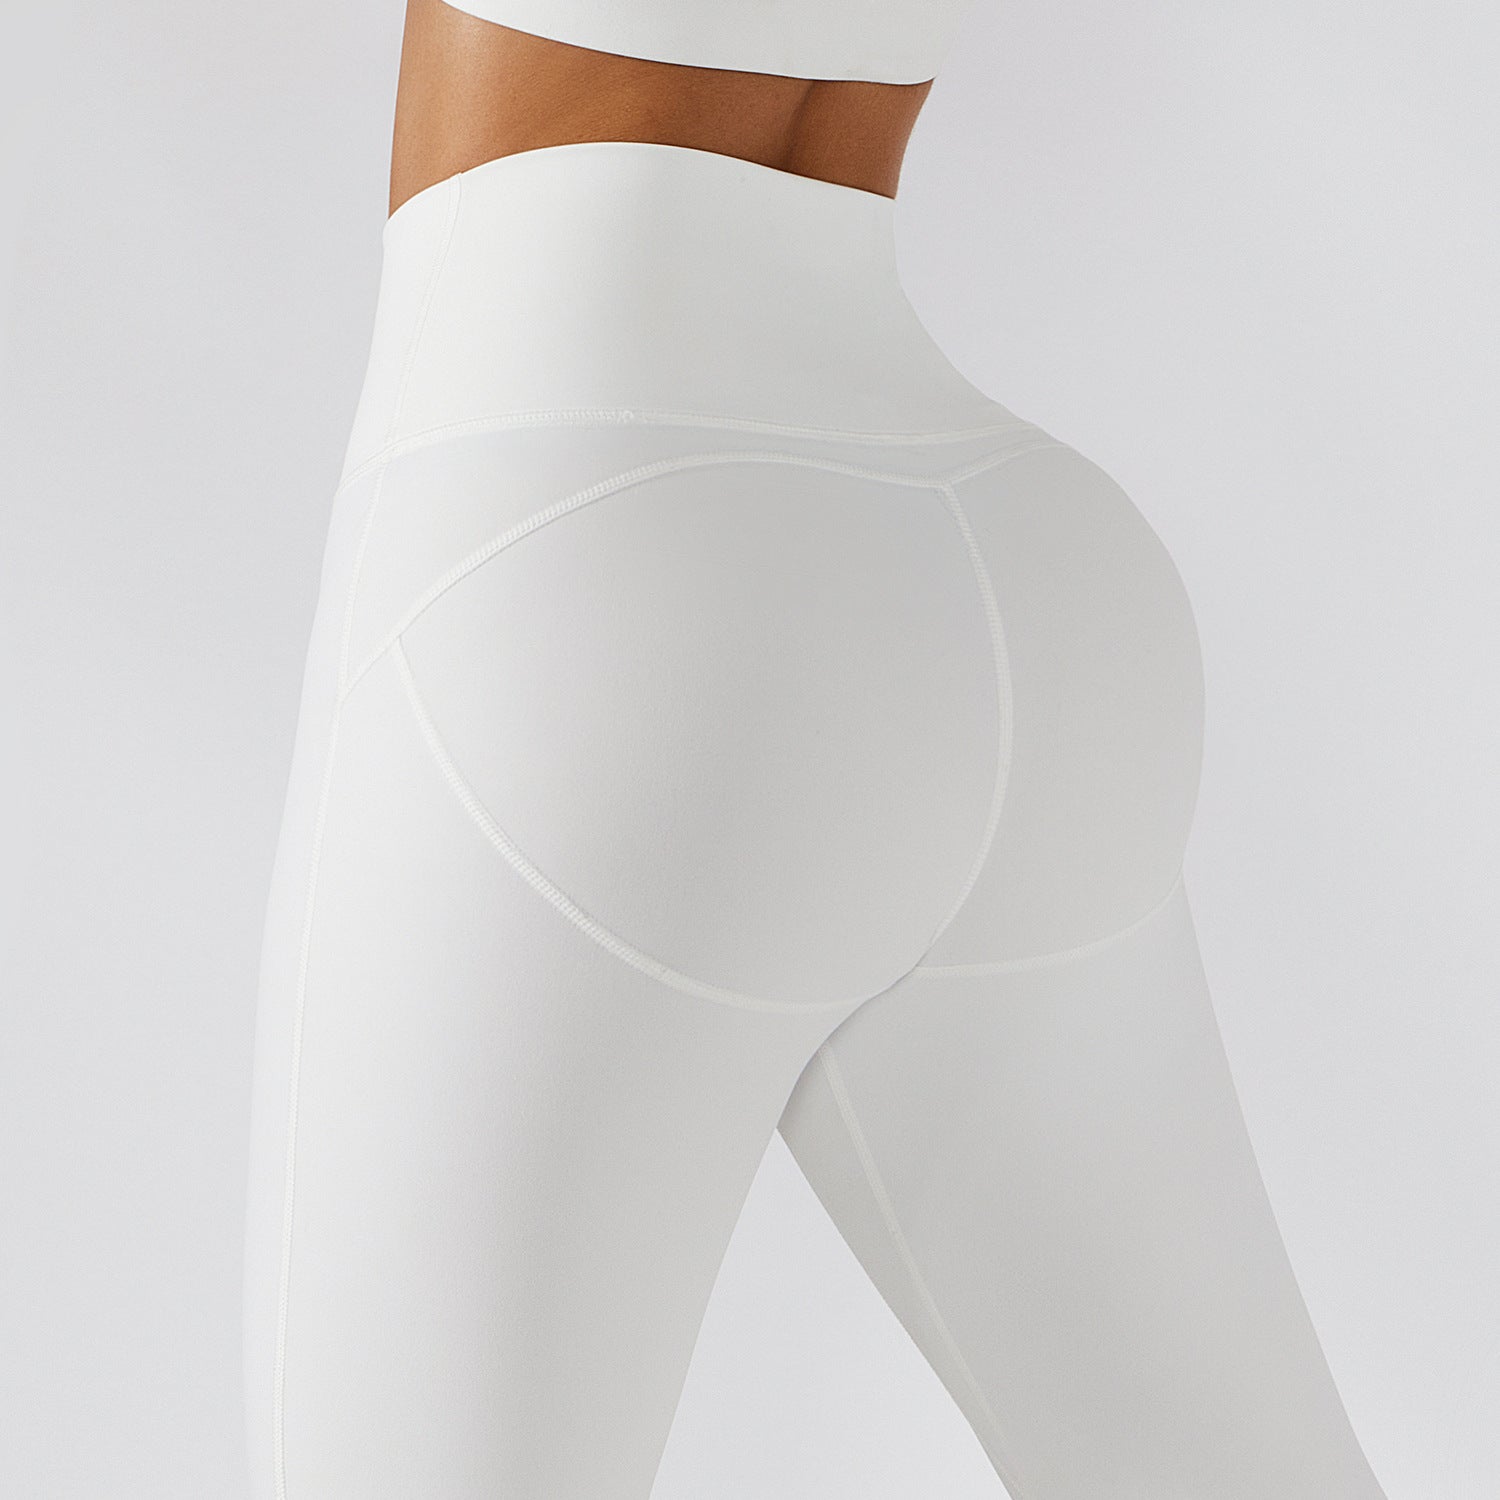 New Pilates Outwear Yoga Pants Cycling Sports Pants High Waist Slim Hip Lifting Running Tights